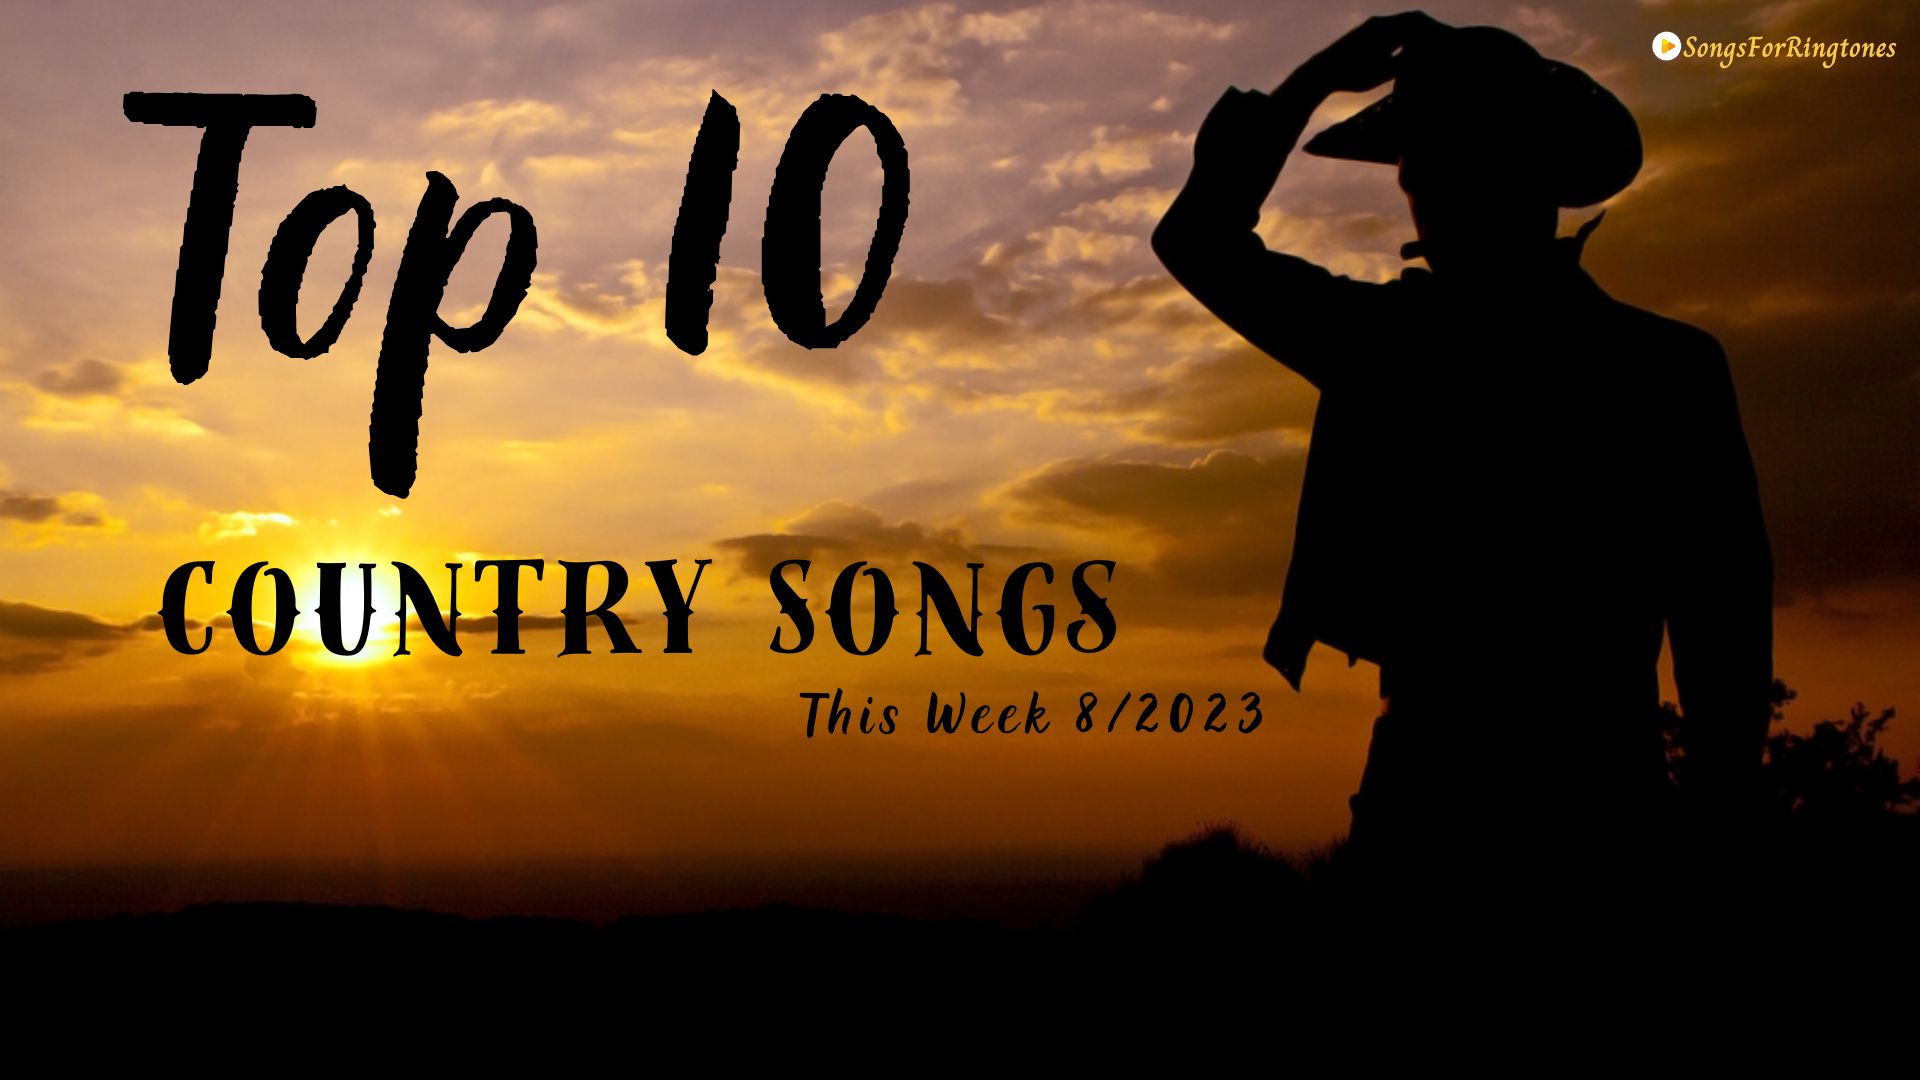 Top 10 Country Songs This Week 